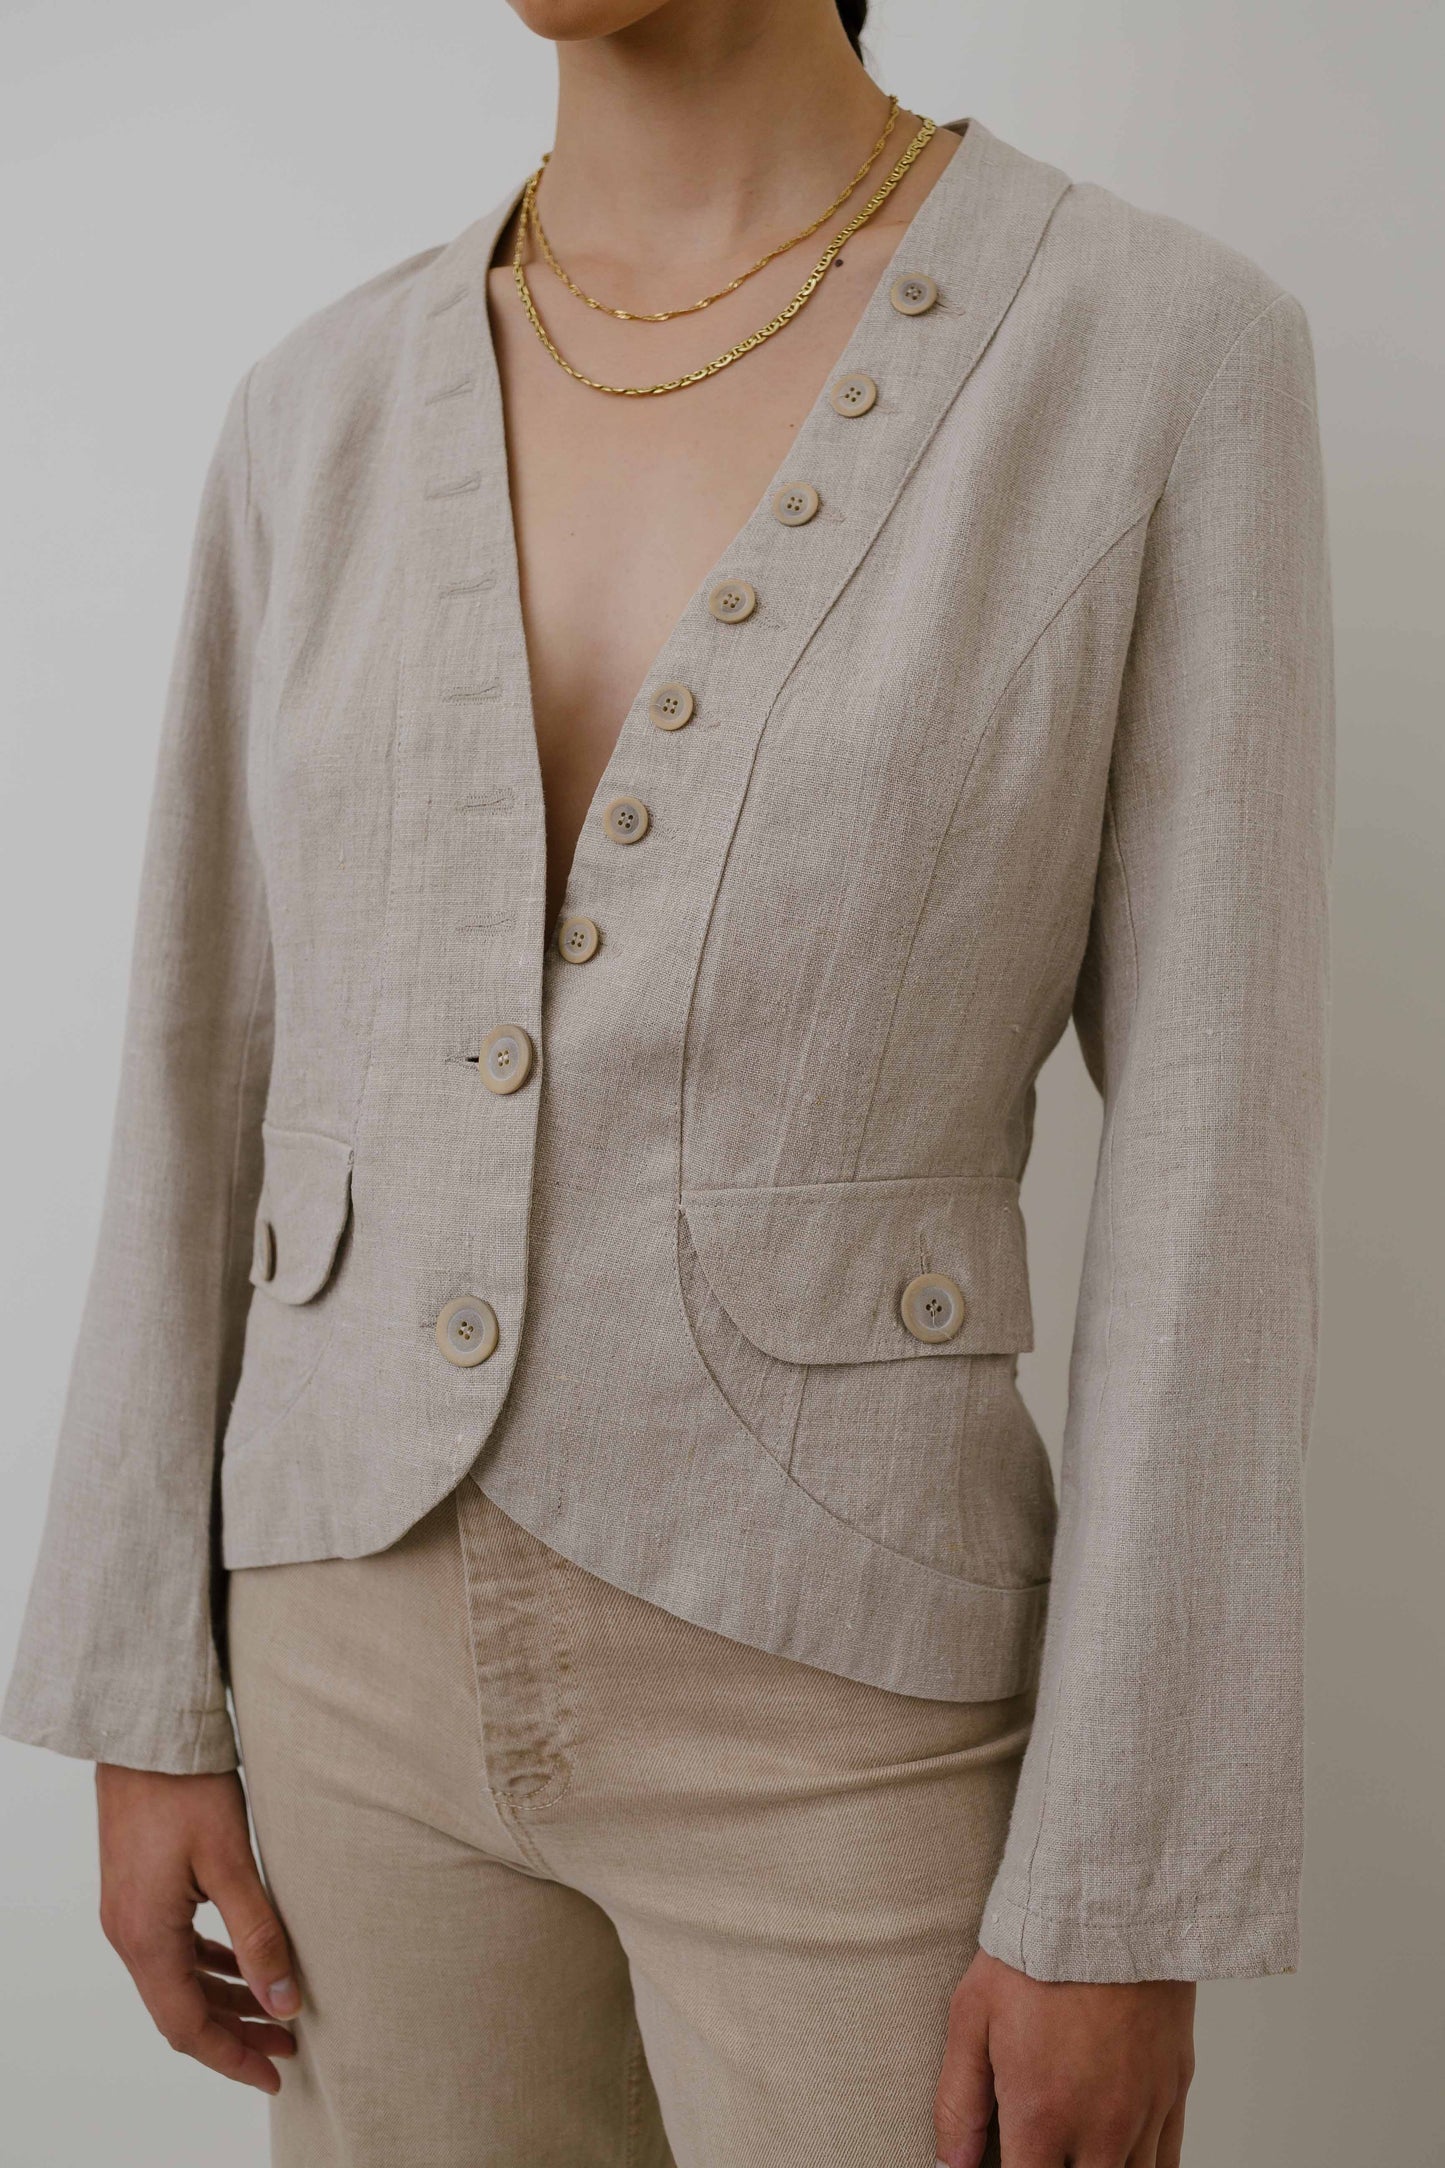 Vintage linen jacket with decorative front